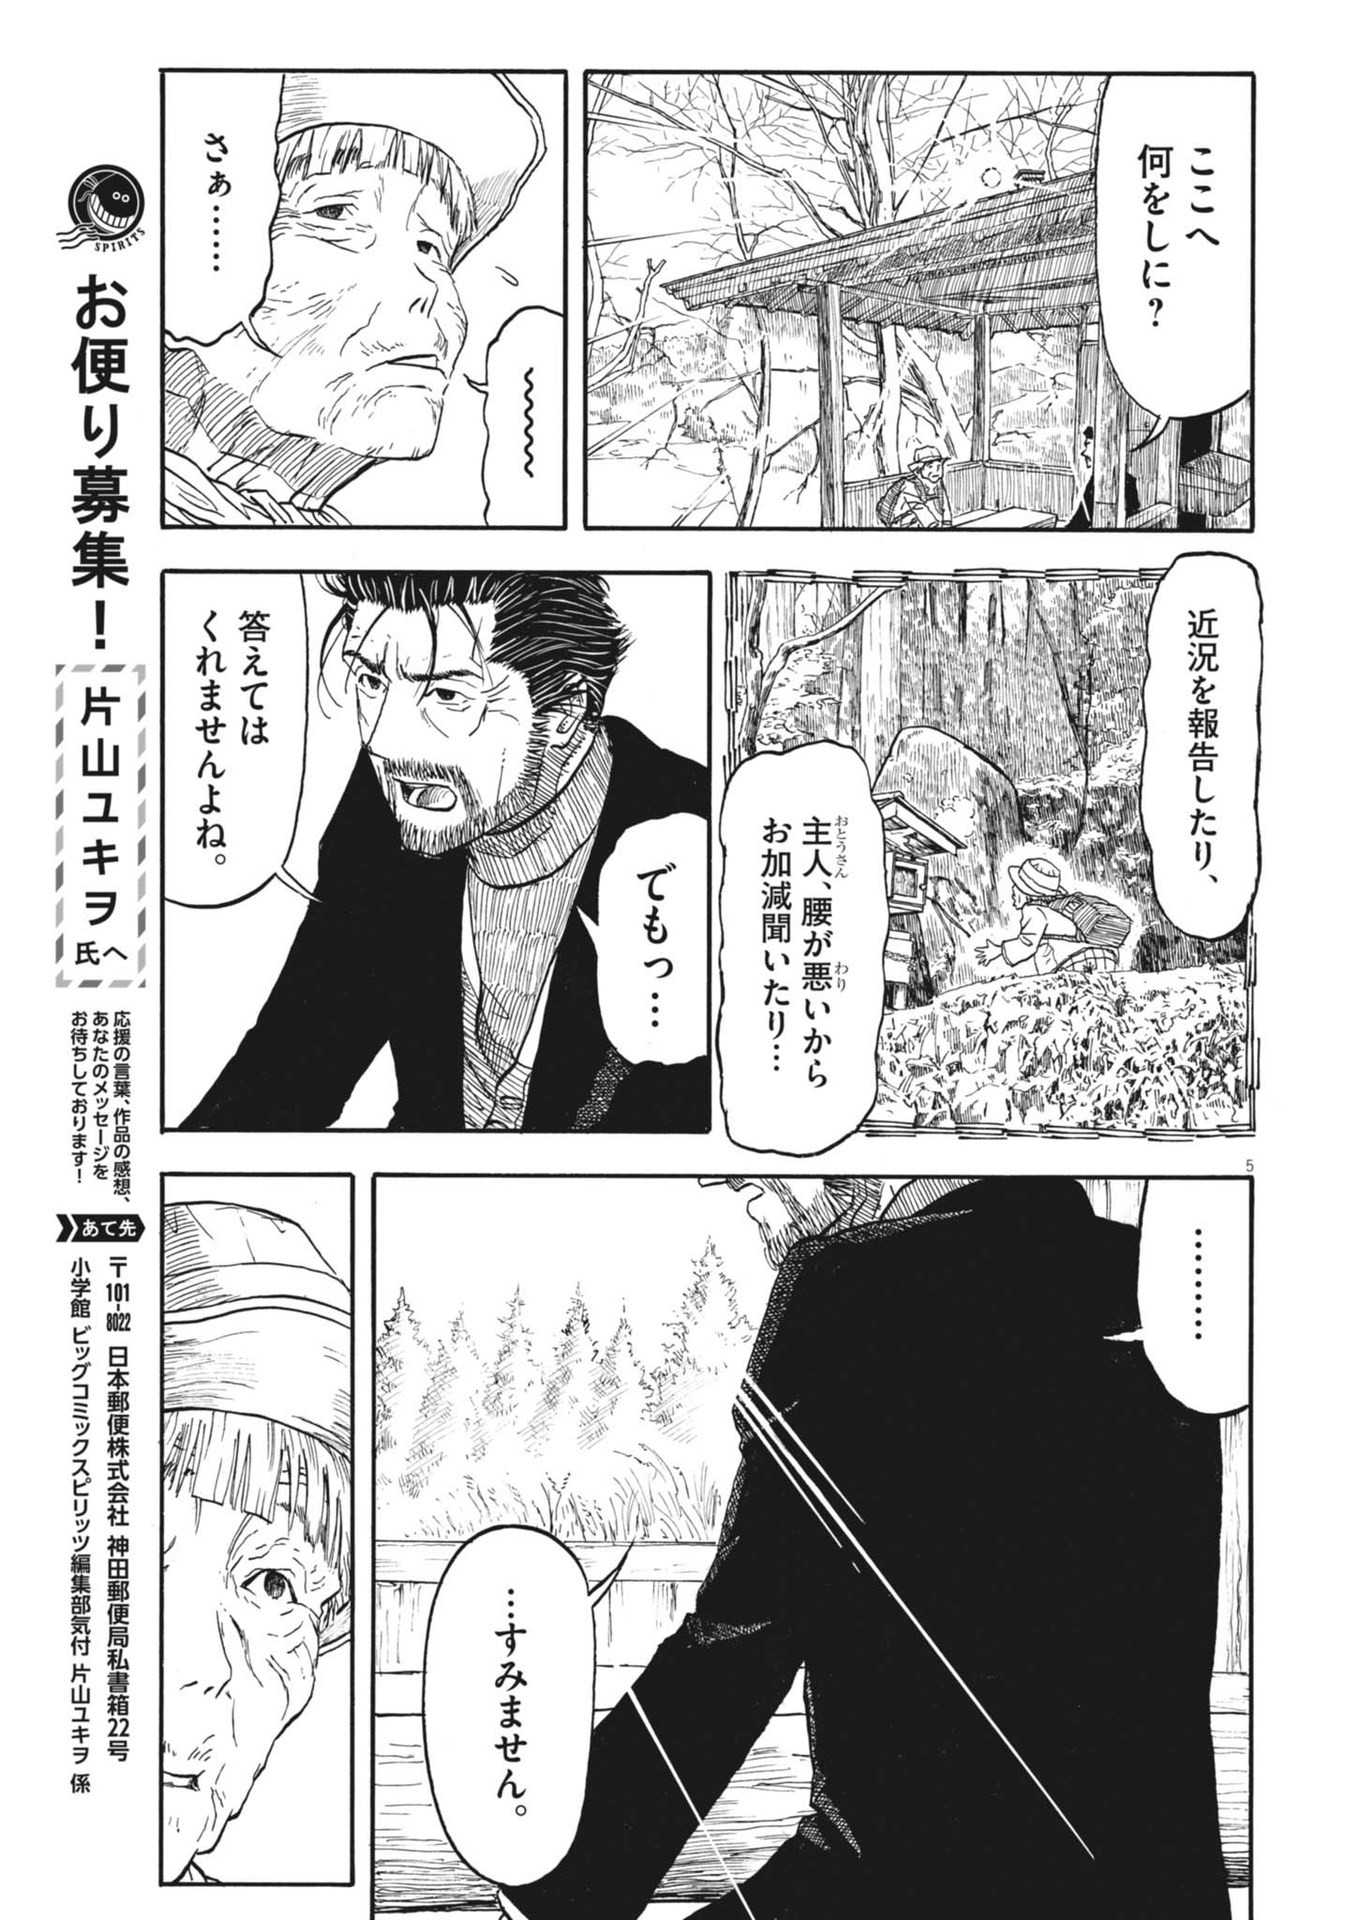 Komegura Fuufu no Recipe-chou - Chapter 37 - Page 5